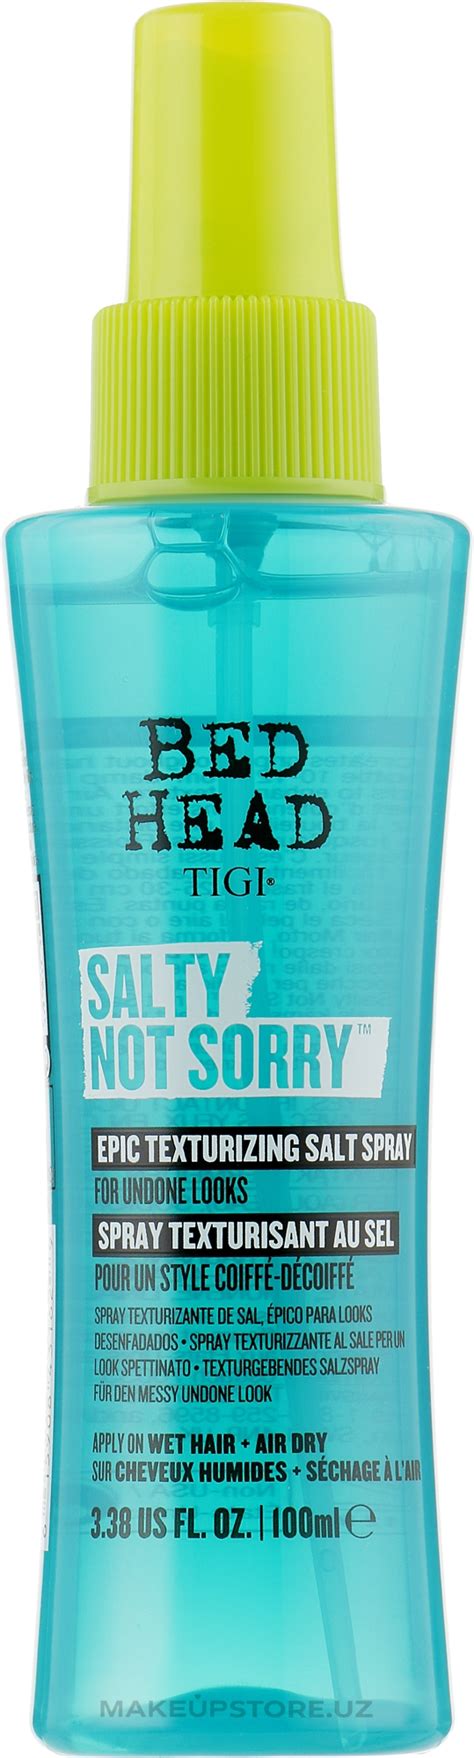 Tigi Bed Head Salty Not Sorry Texturizing Salt Spray Текстурирующий